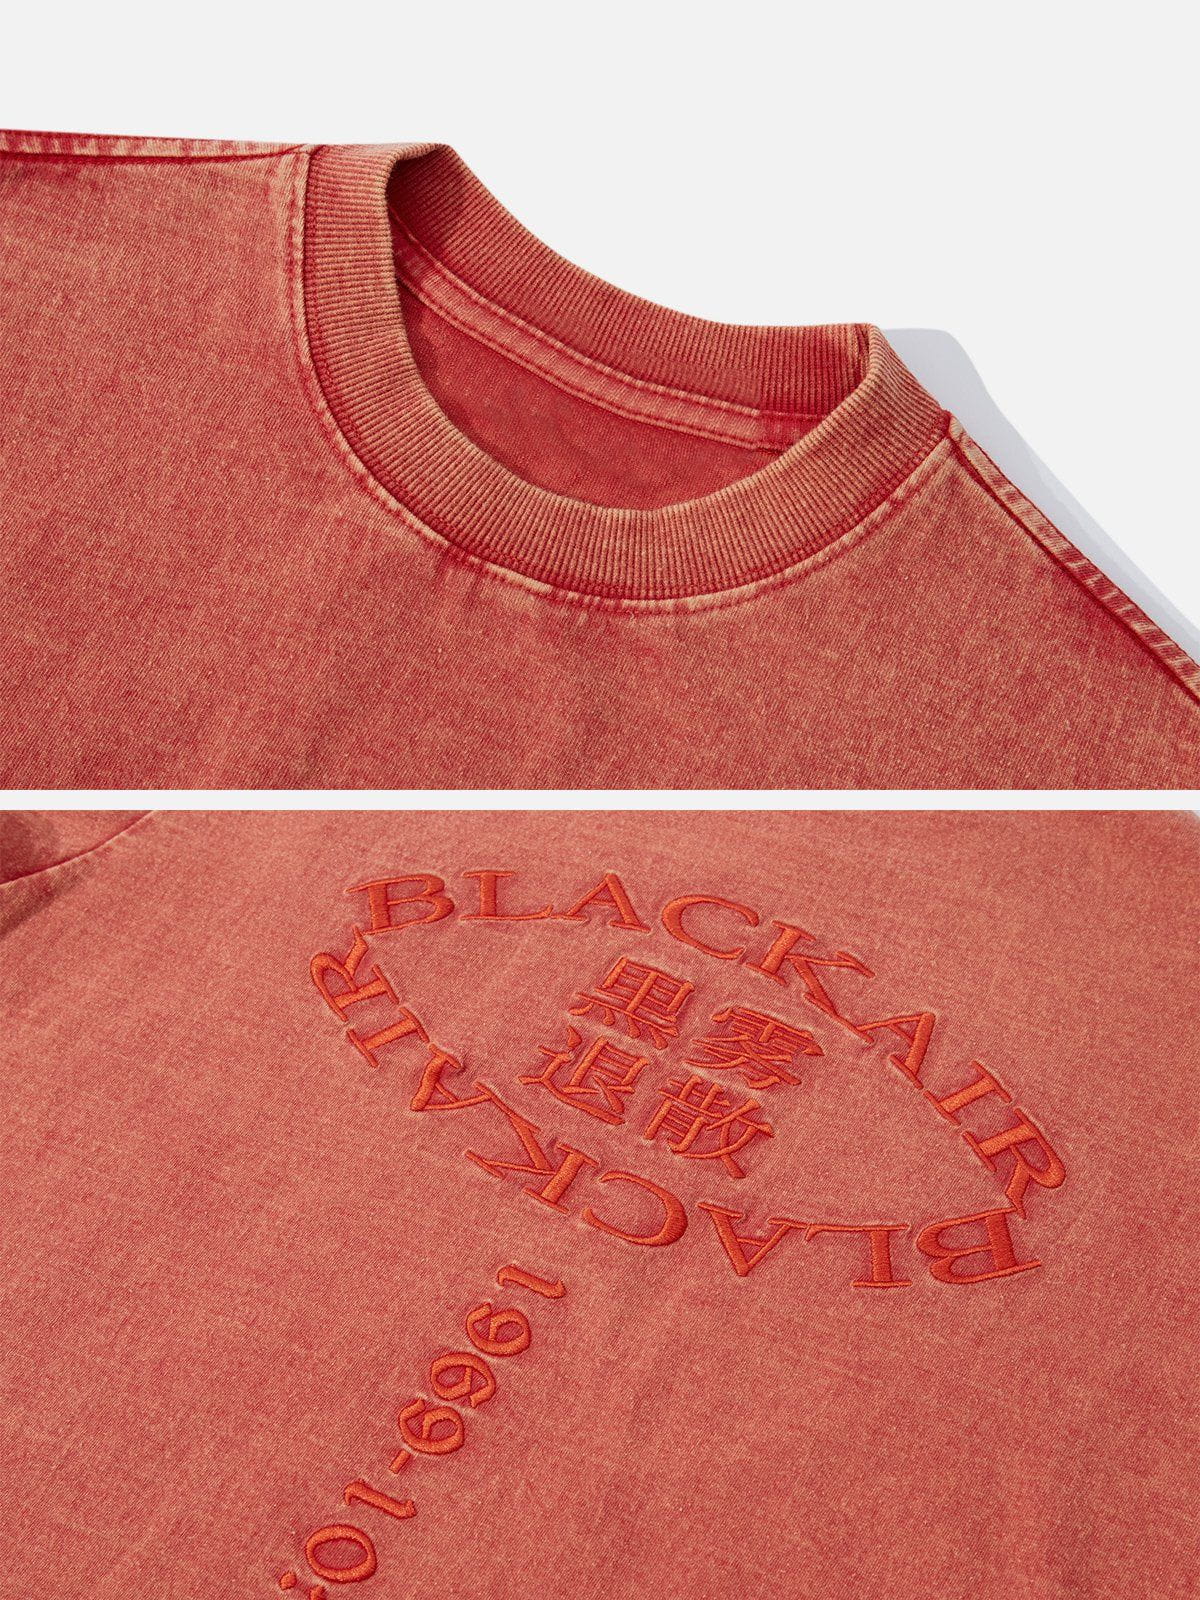 Sneakerland™ - Vintage Embroidery Tee